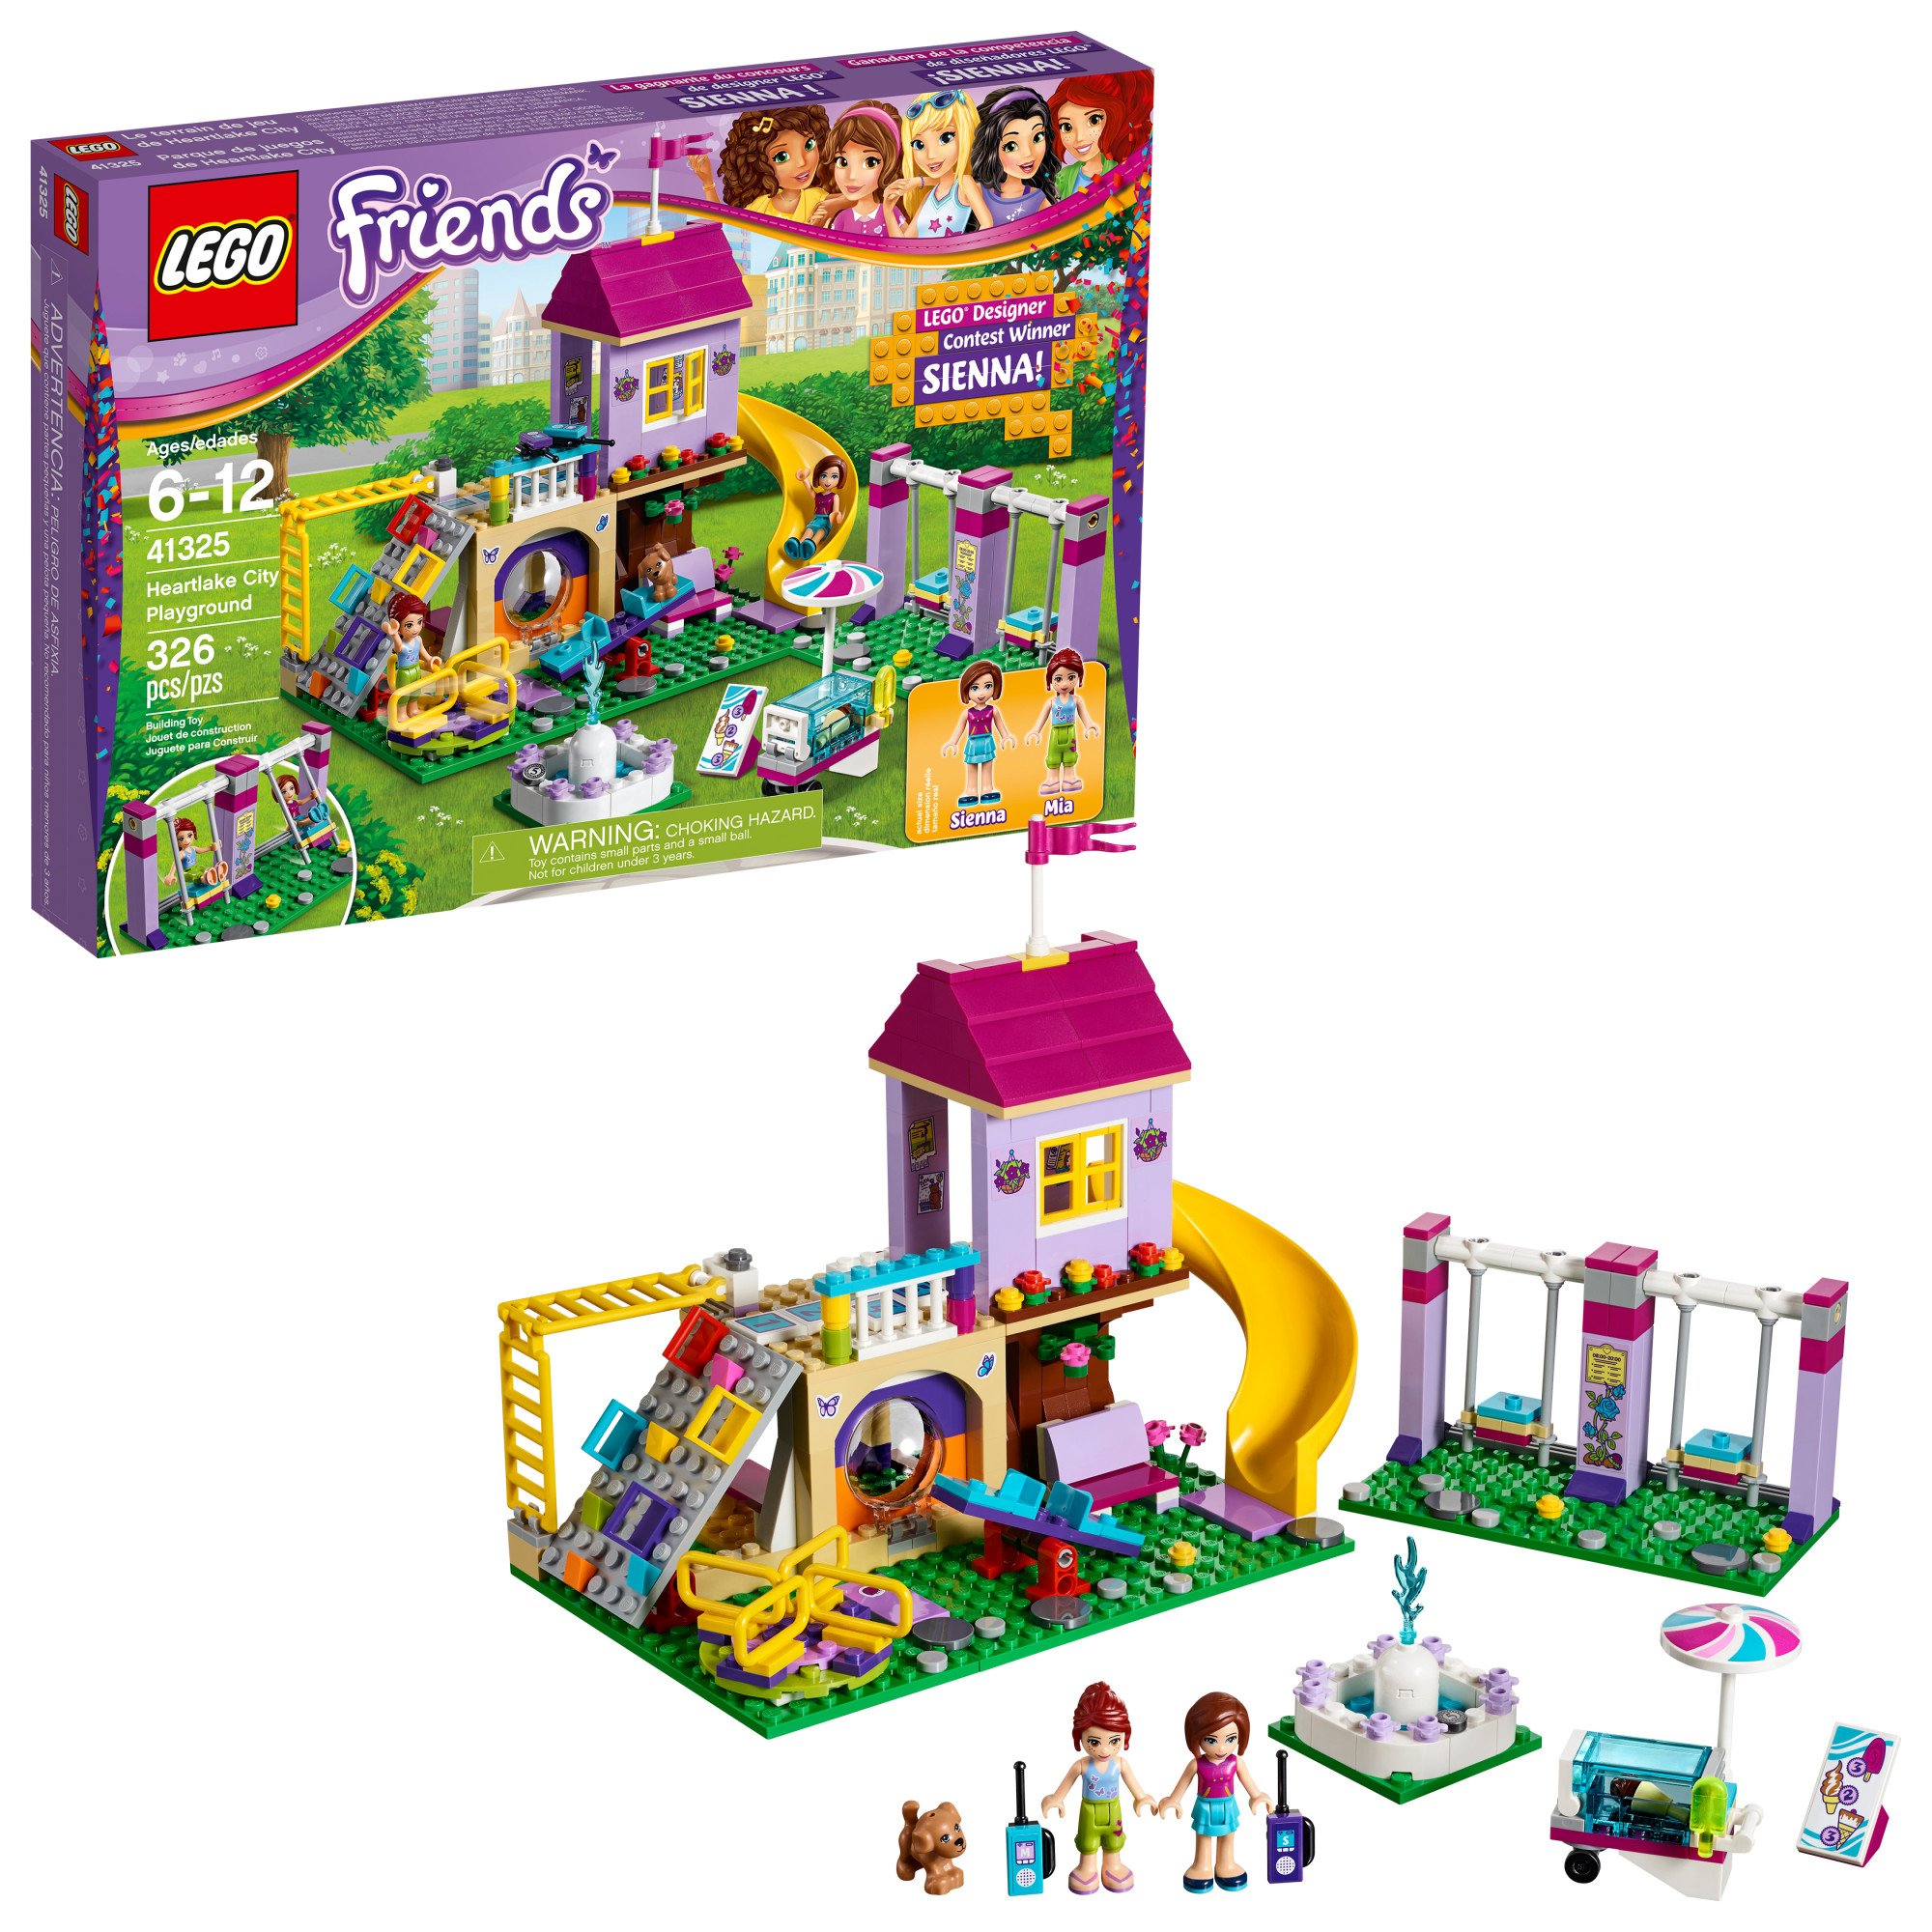 LEGO Friends Heartlake City Playground 41325 Building Kit (326 Piece) (Amazon Exclusive)